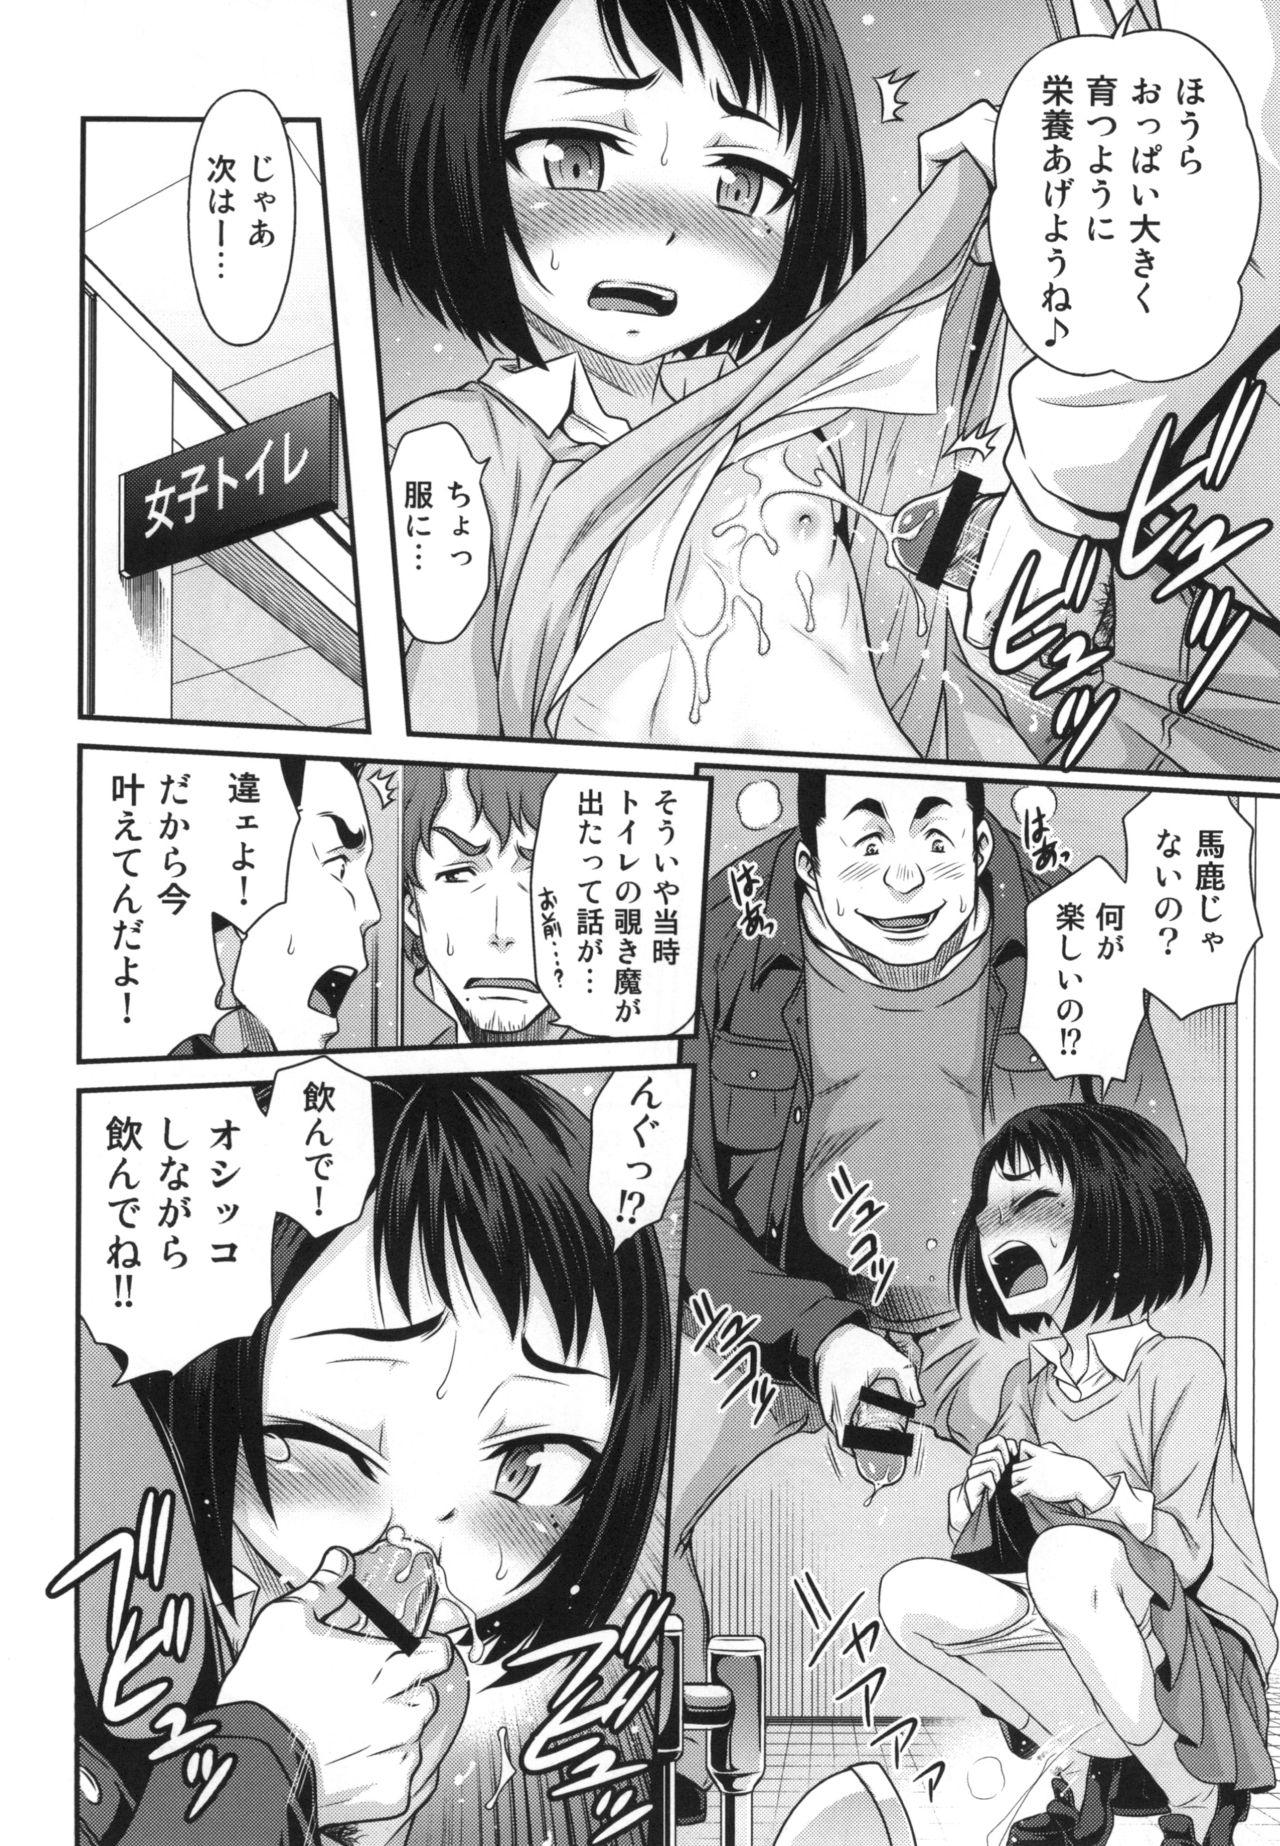  Erika no ChupaChupa Quest!! - Sakura quest Linda - Page 12